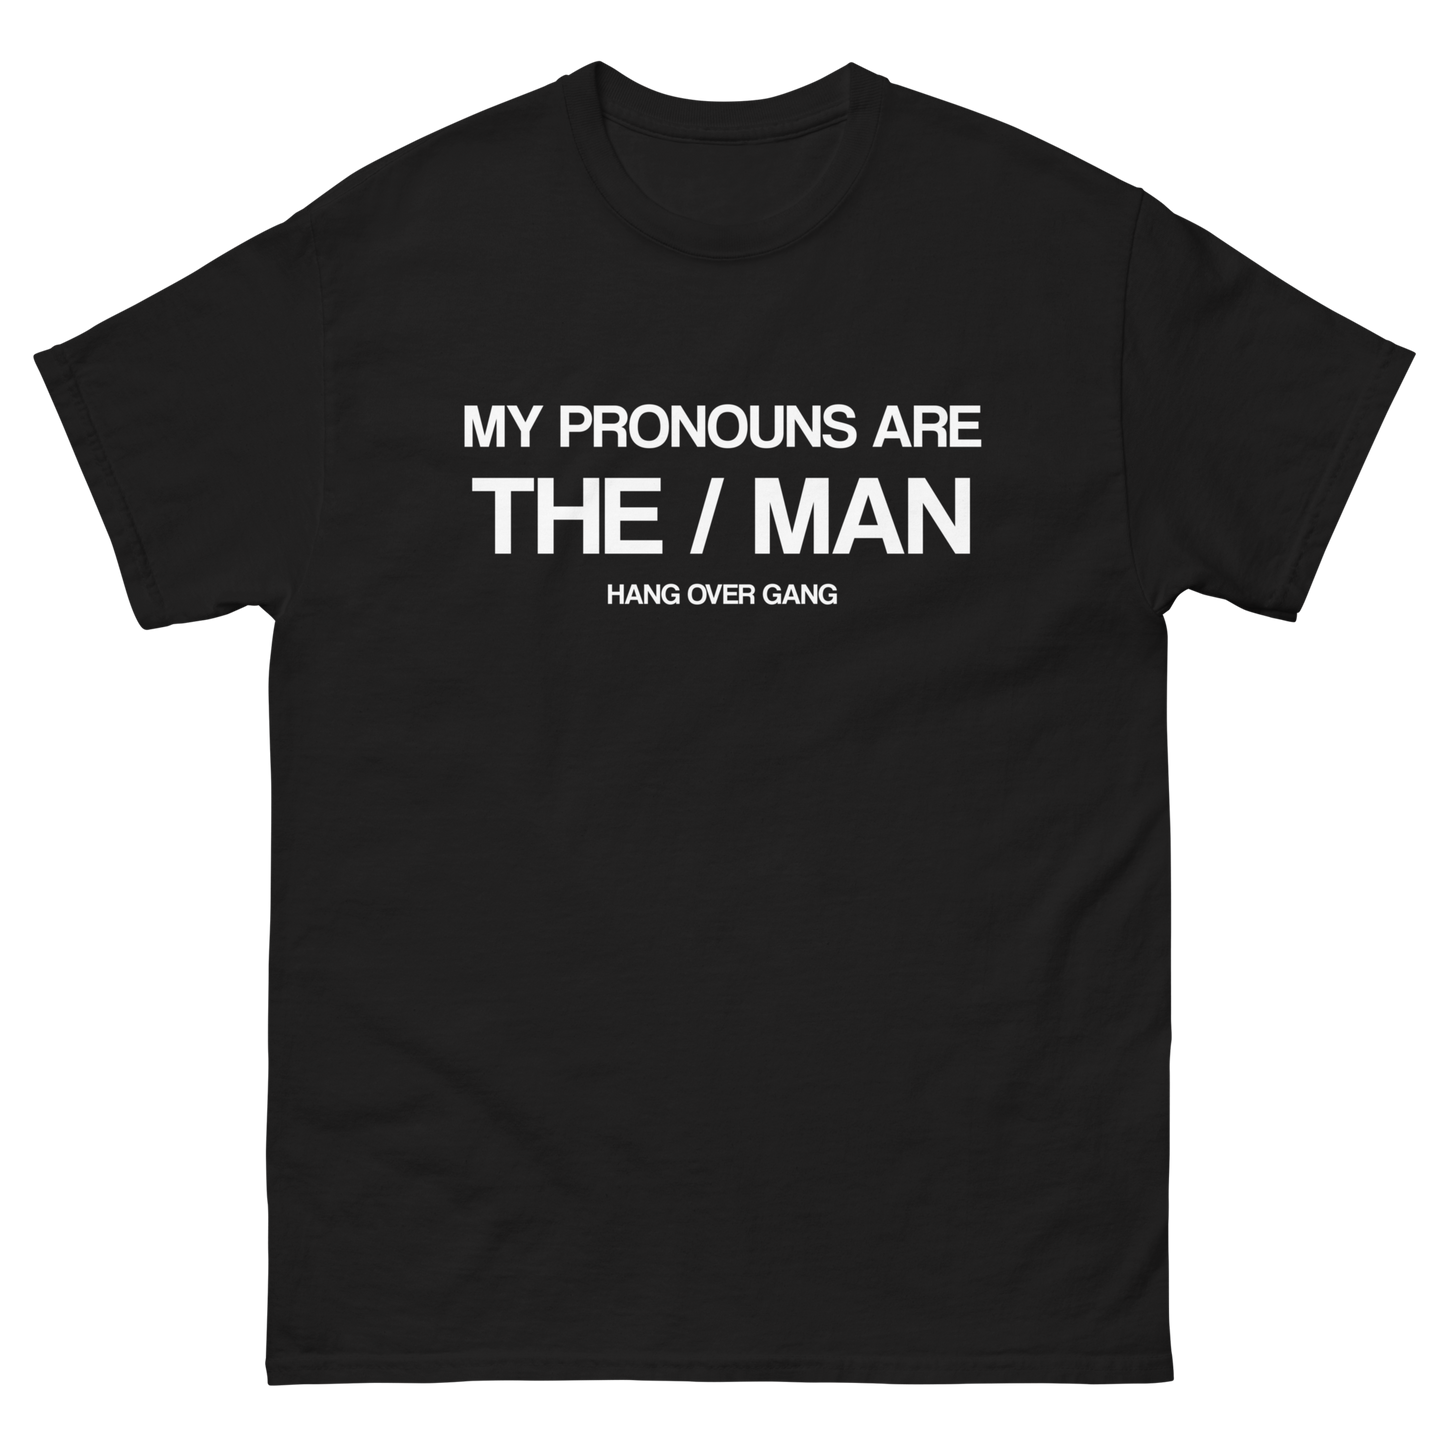 "The/Man" T-Shirt